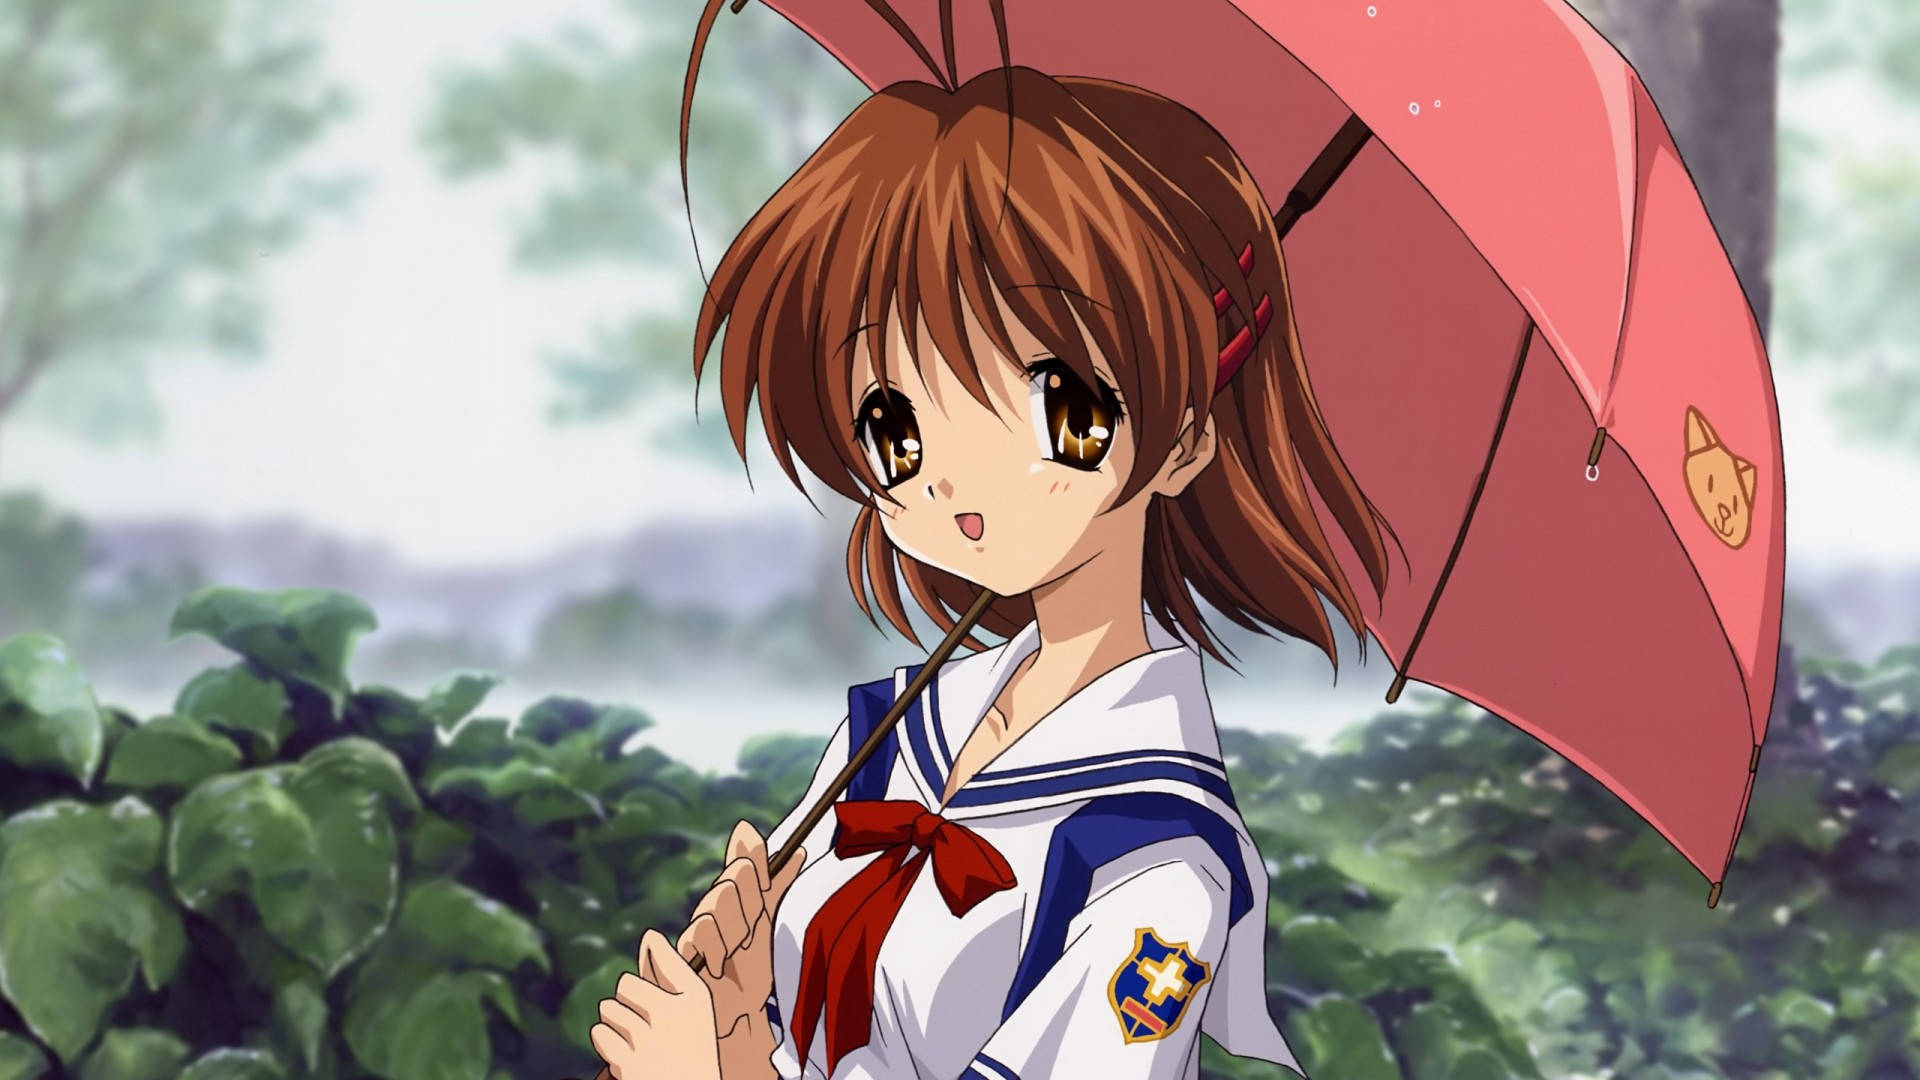 Cute Anime Girl Holding Umbrella Wallpaper